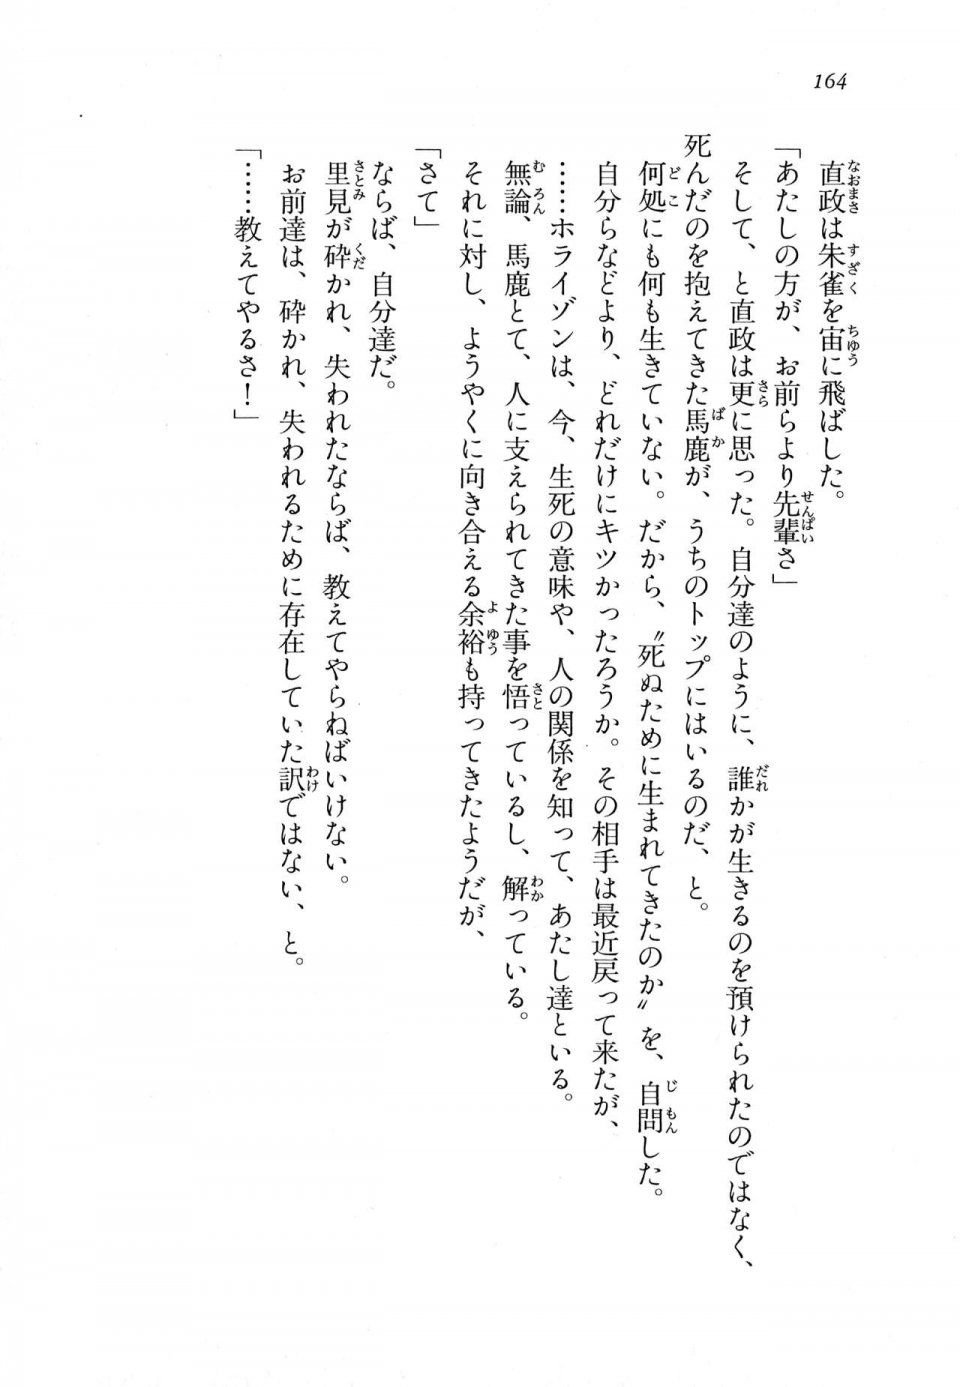 Kyoukai Senjou no Horizon LN Vol 18(7C) Part 1 - Photo #164